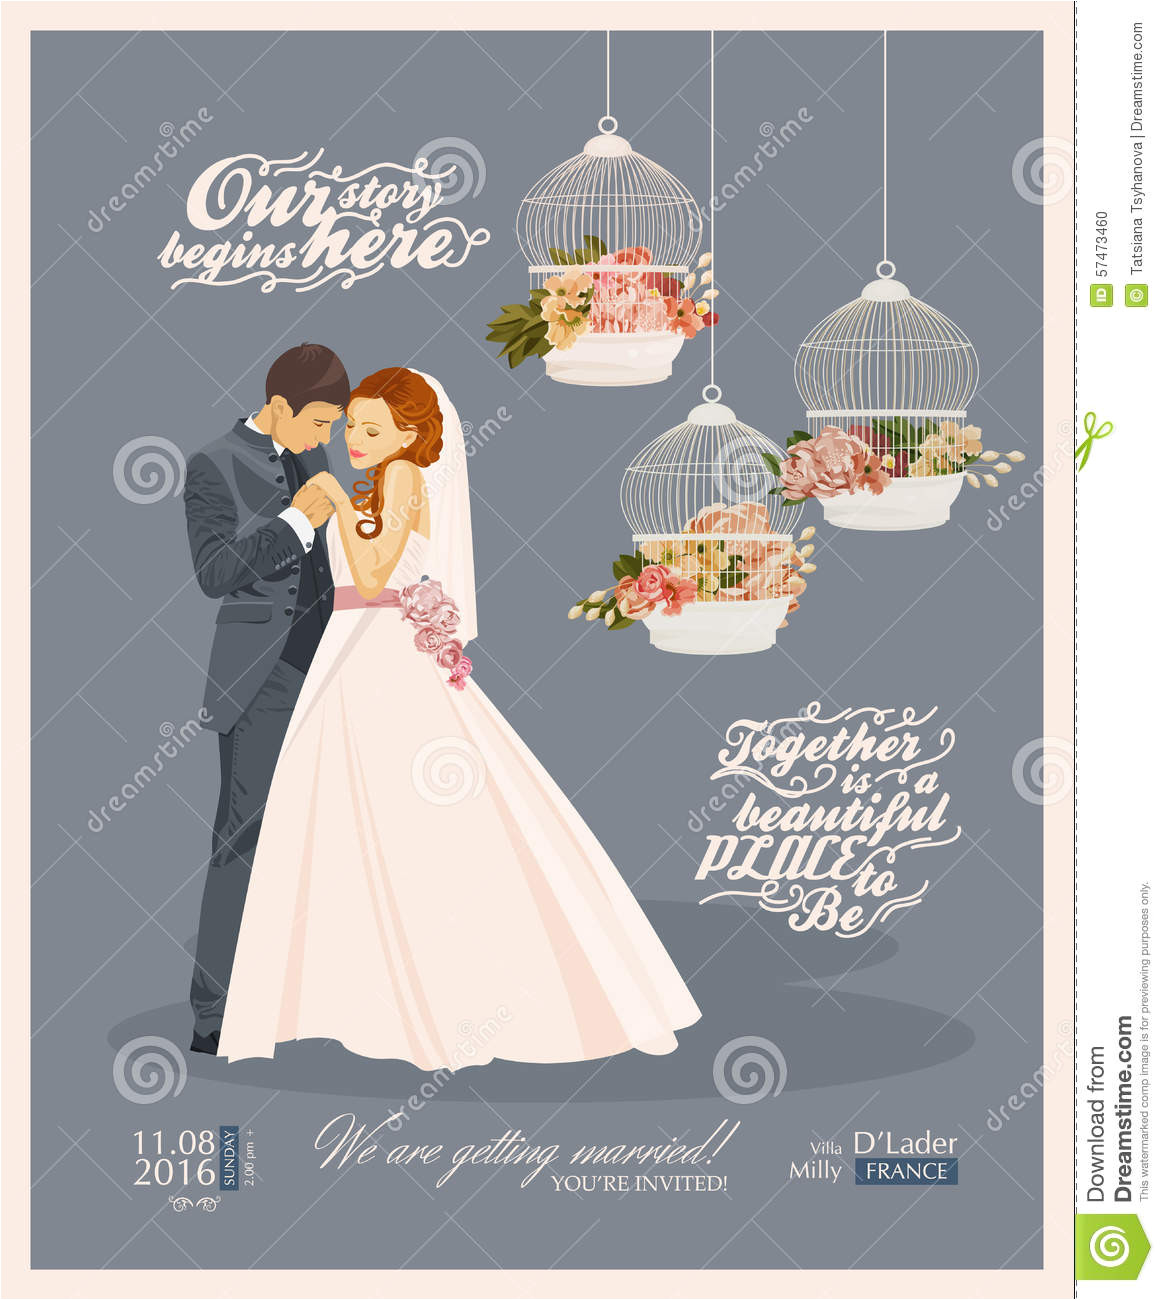 stock illustration wedding vintage invitation card template vector bride groom cute couple retro style image57473460